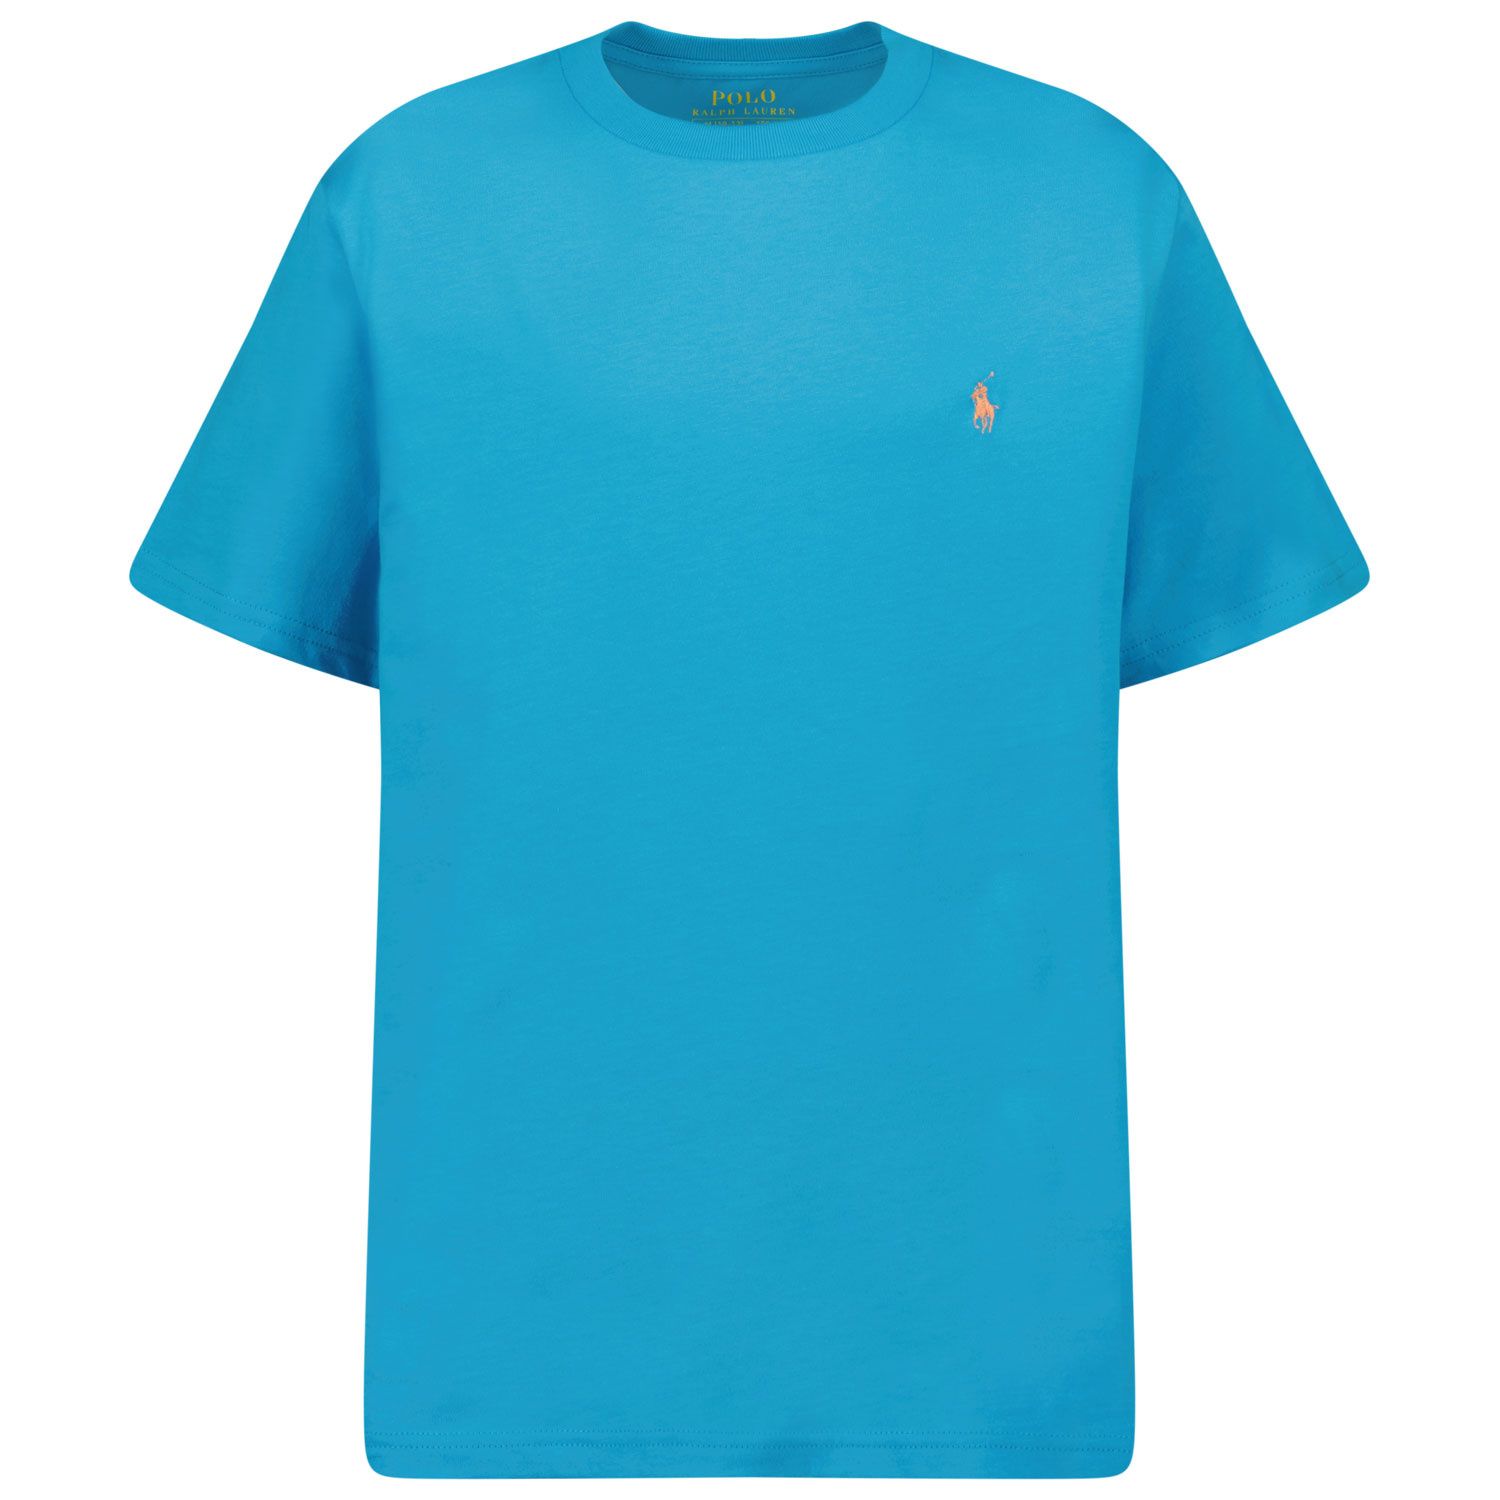 Picture of Ralph Lauren 832904 kids t-shirt turquoise